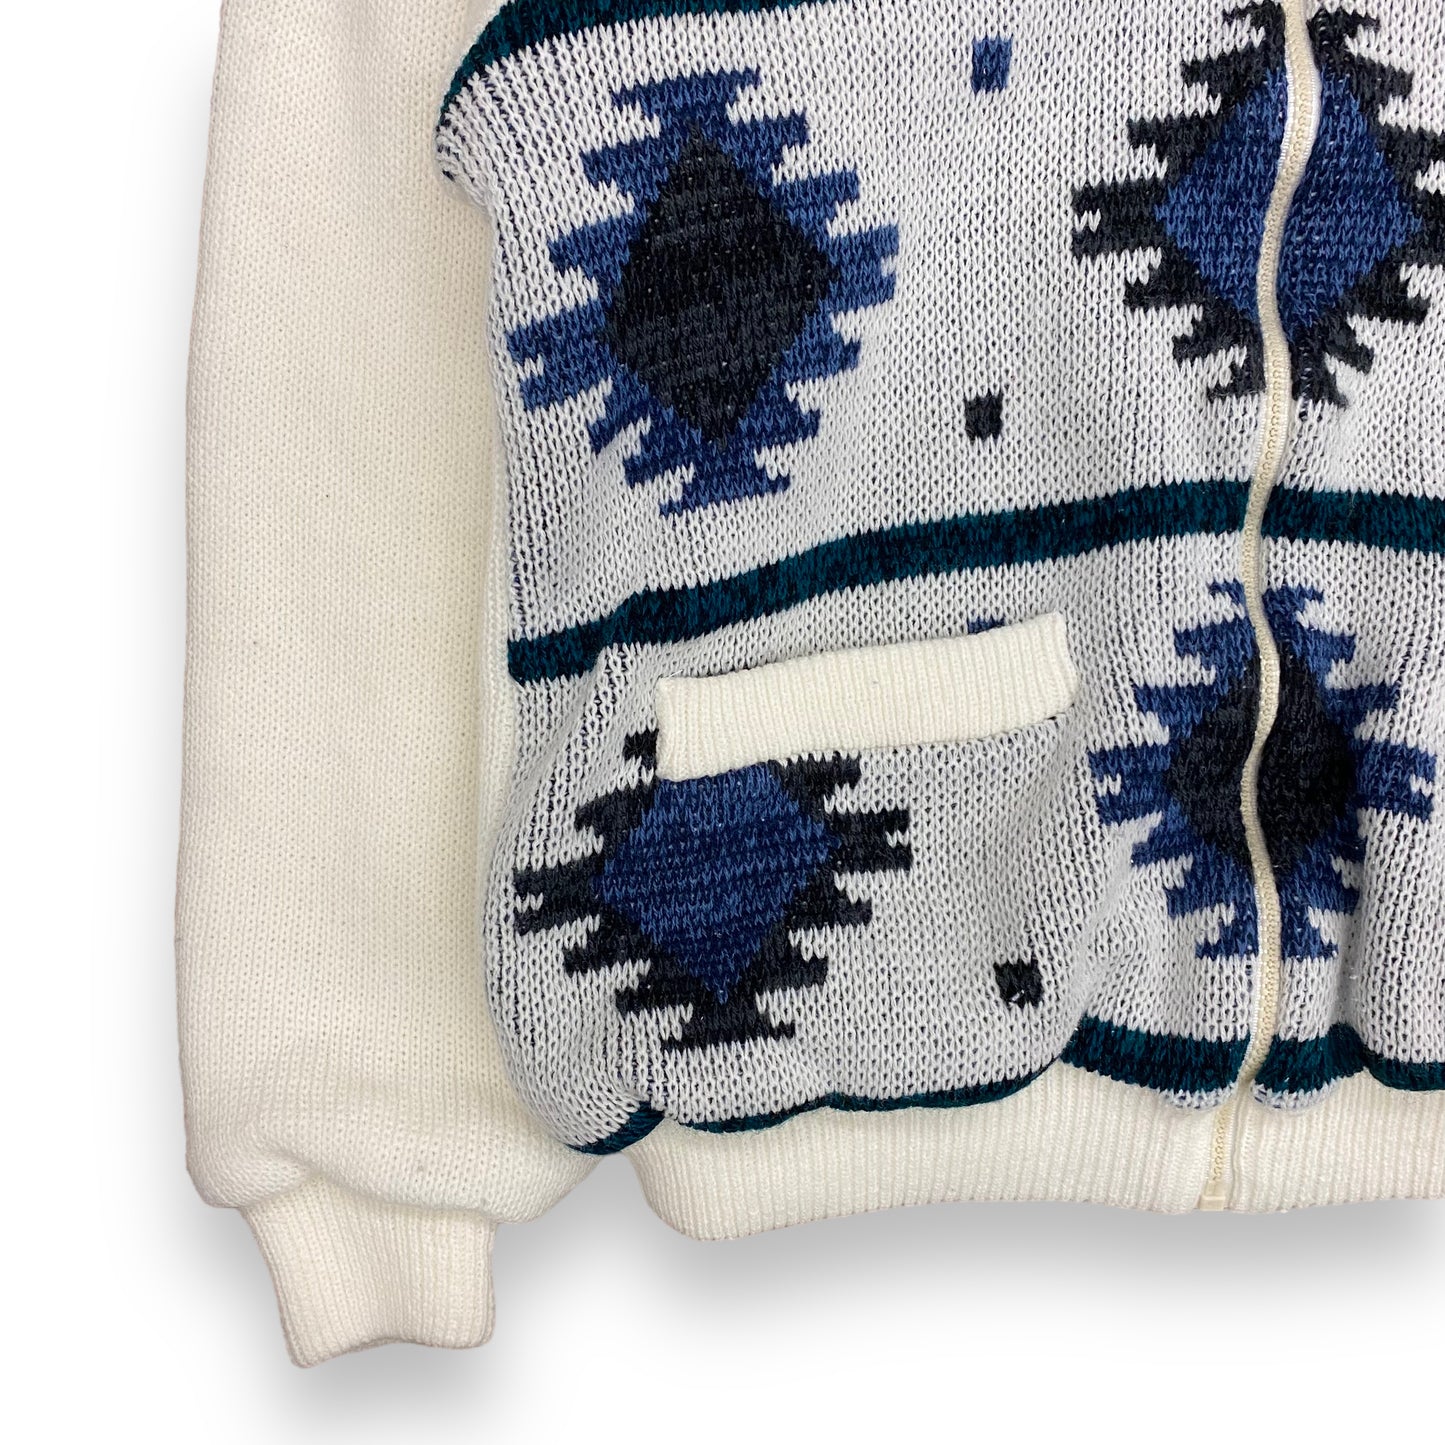 Vintage 1990s Southwestern Knit Zip Up Waffle Lined Sweater - Size Medium